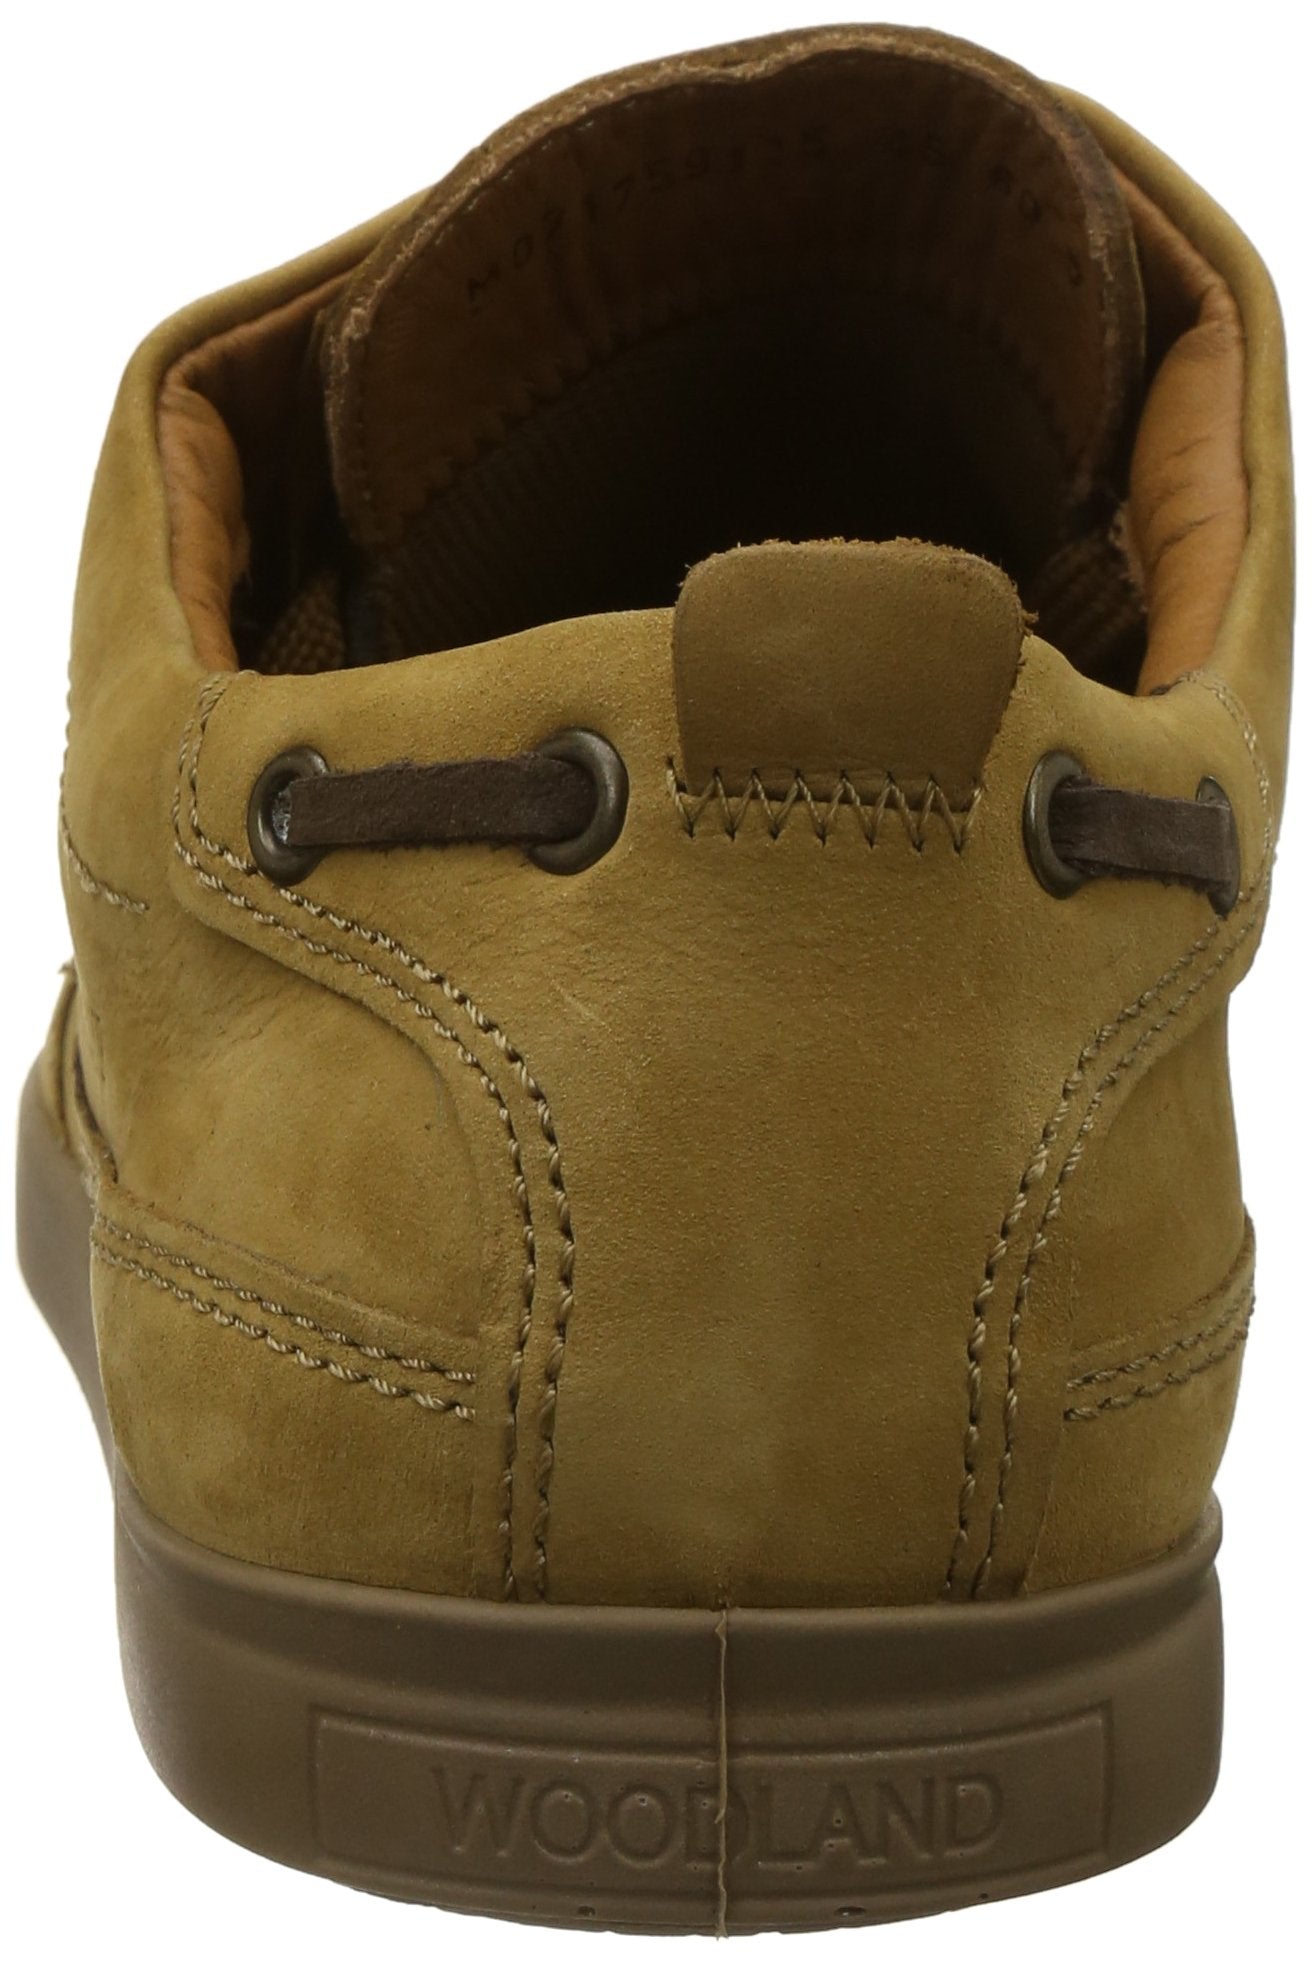 Woodland Men's Camel Leather Sneaker-9 UK (43 EU) (GC 1759115)